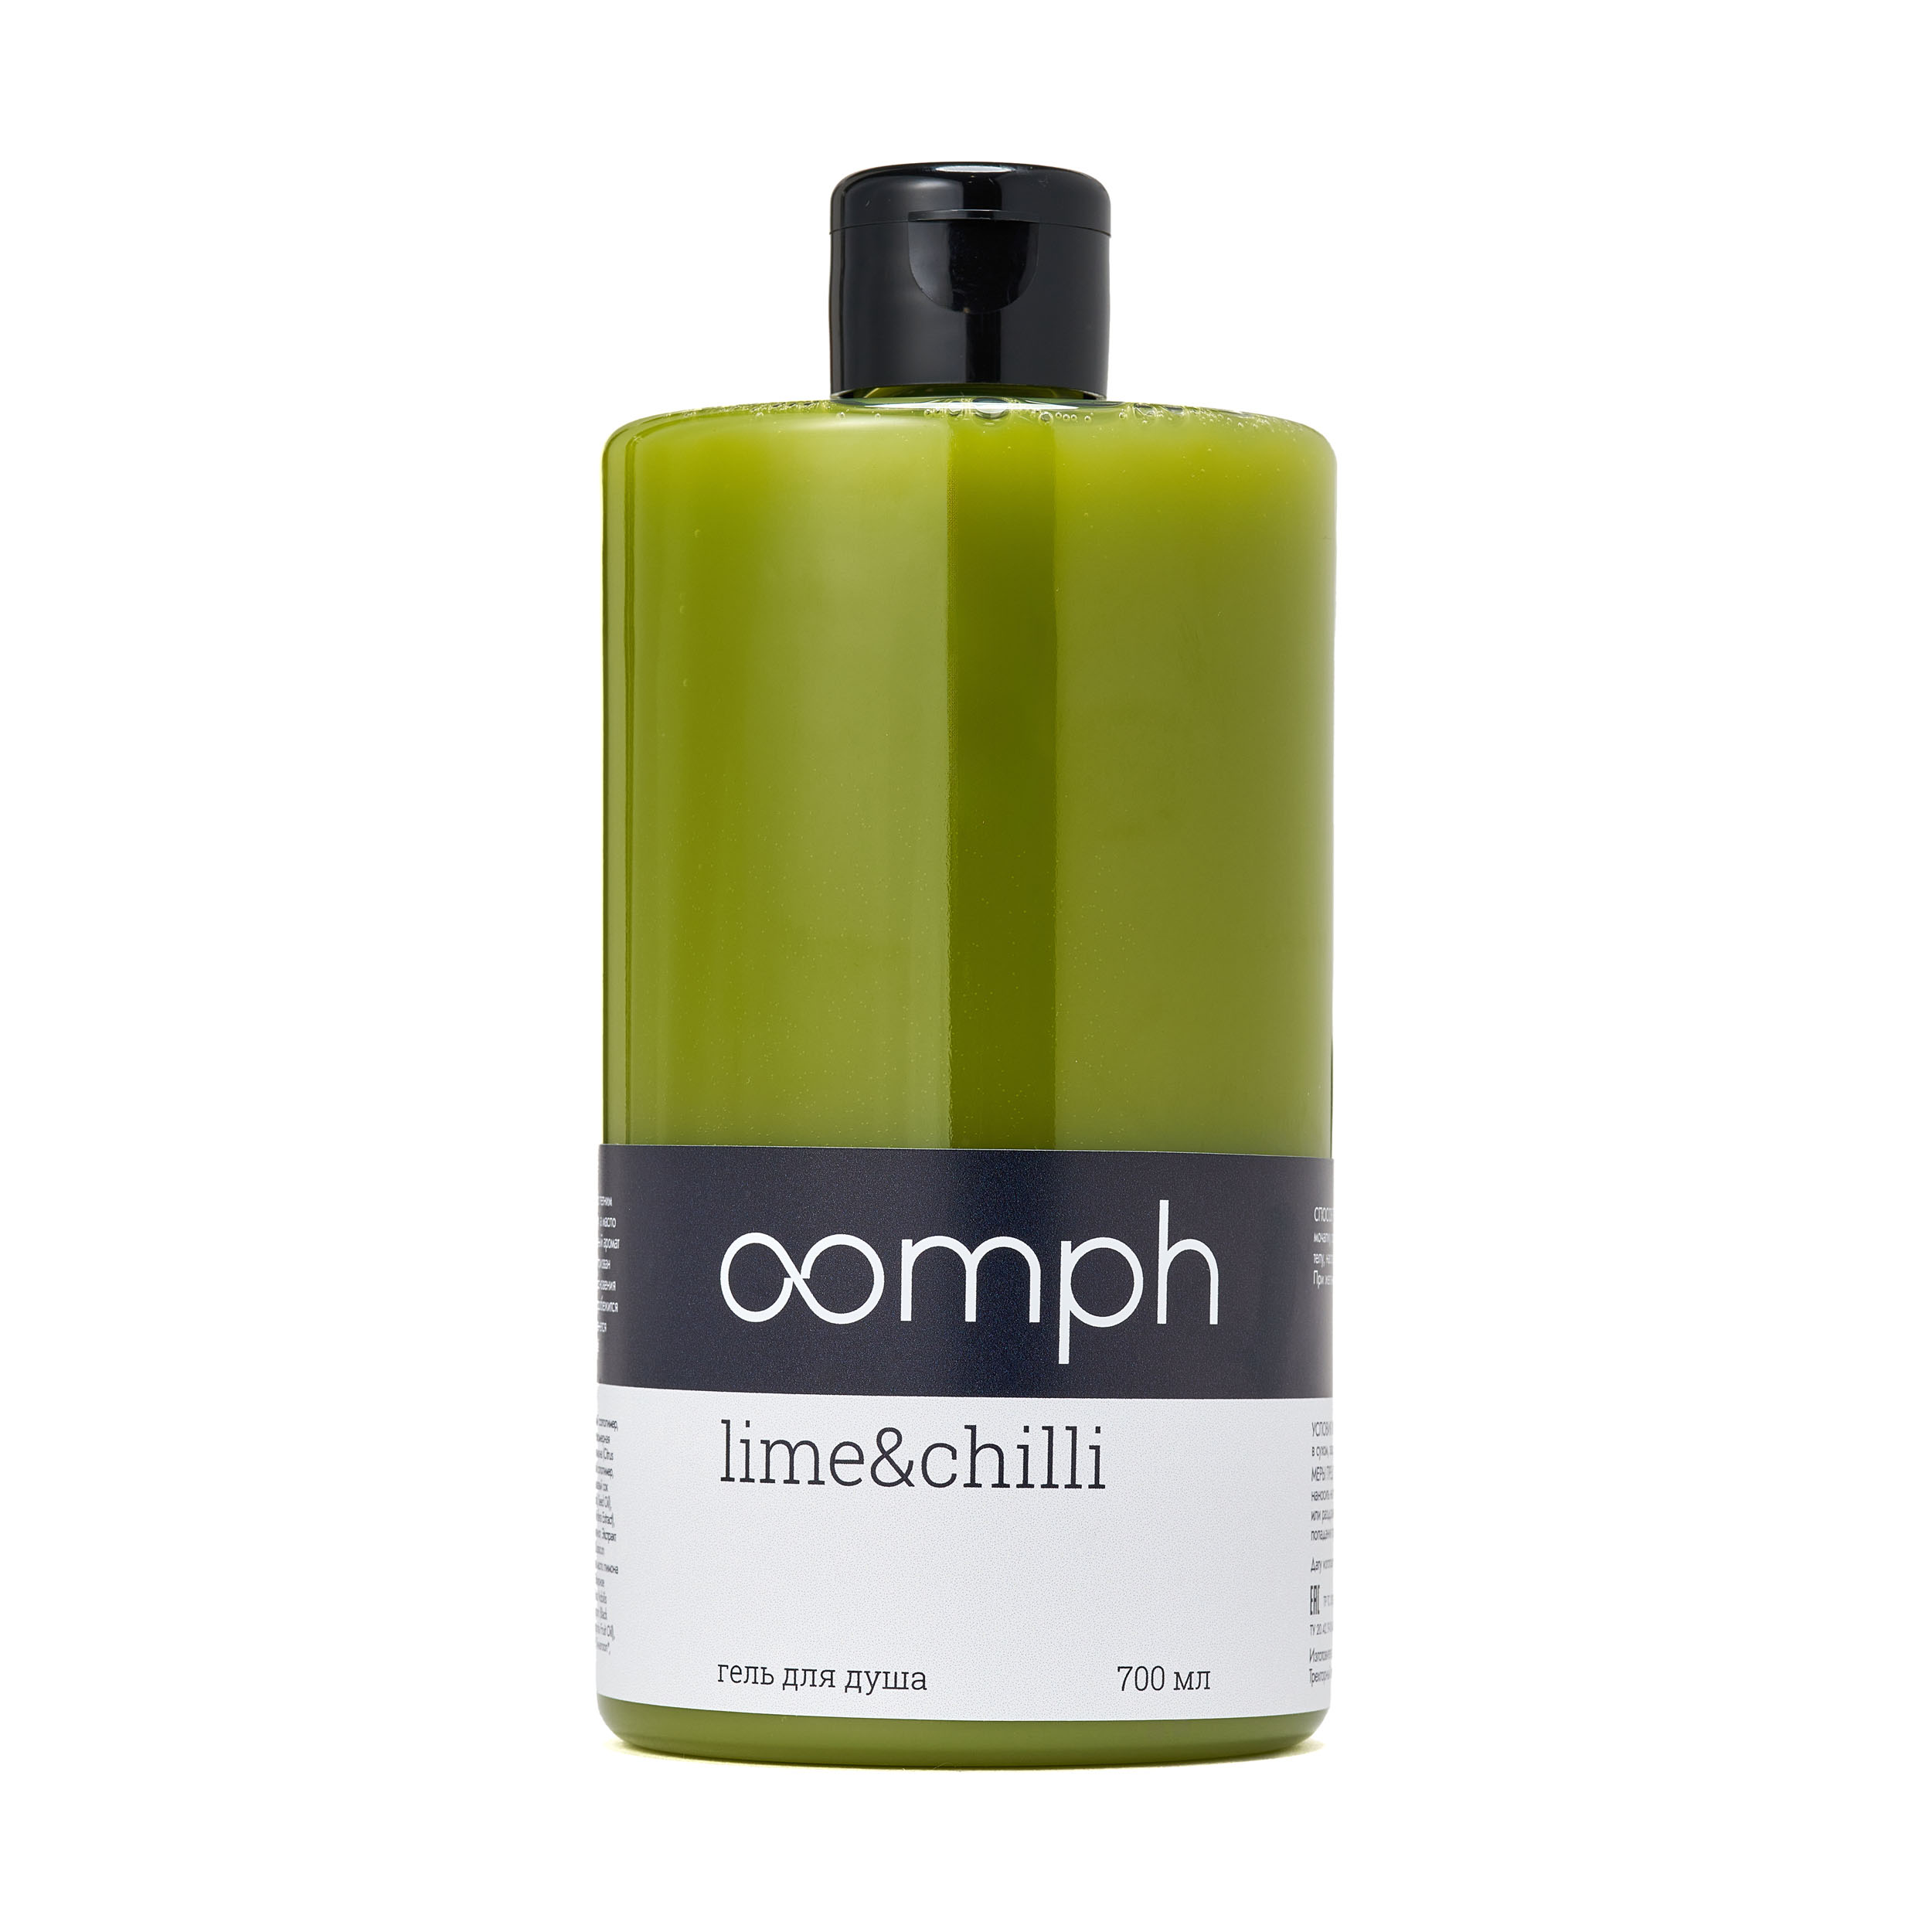 Гель для душа OOMPH Lime&chilli 700мл вглядываясь в солнце жизнь без страха смерти